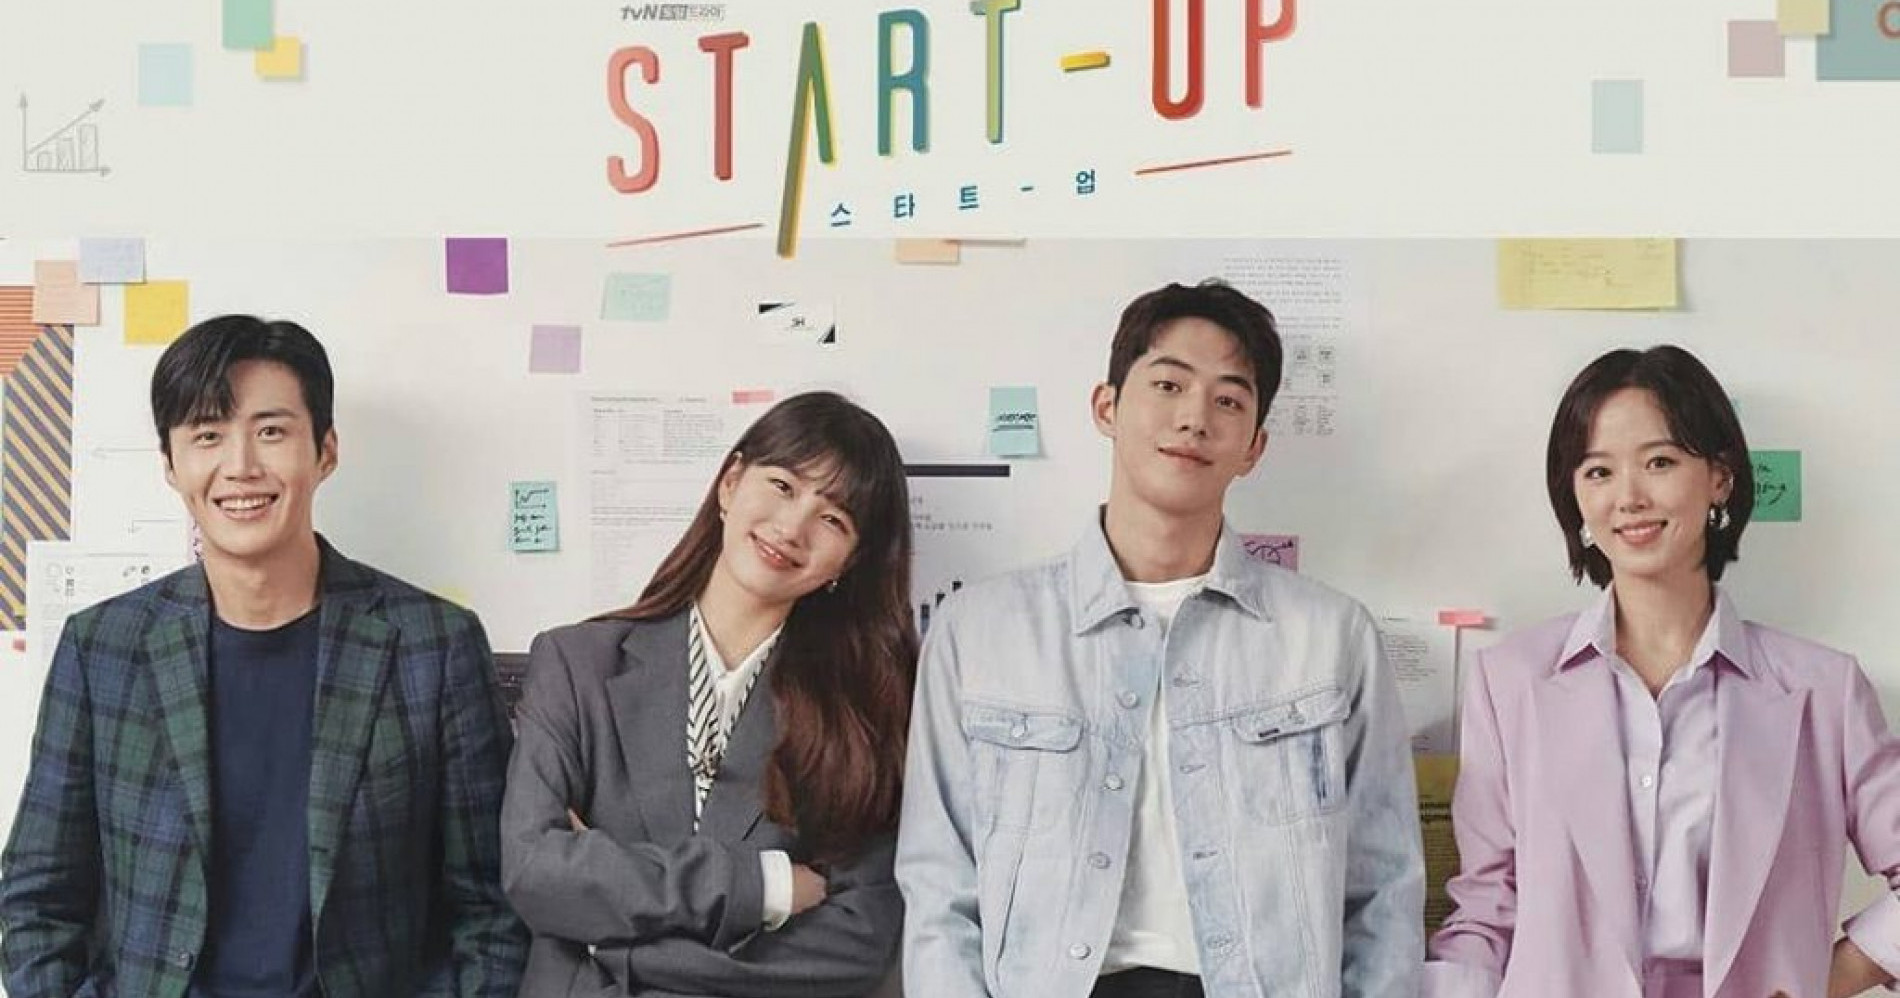 Drama korea Startup yang sangat menginspirasi (Pinterest)